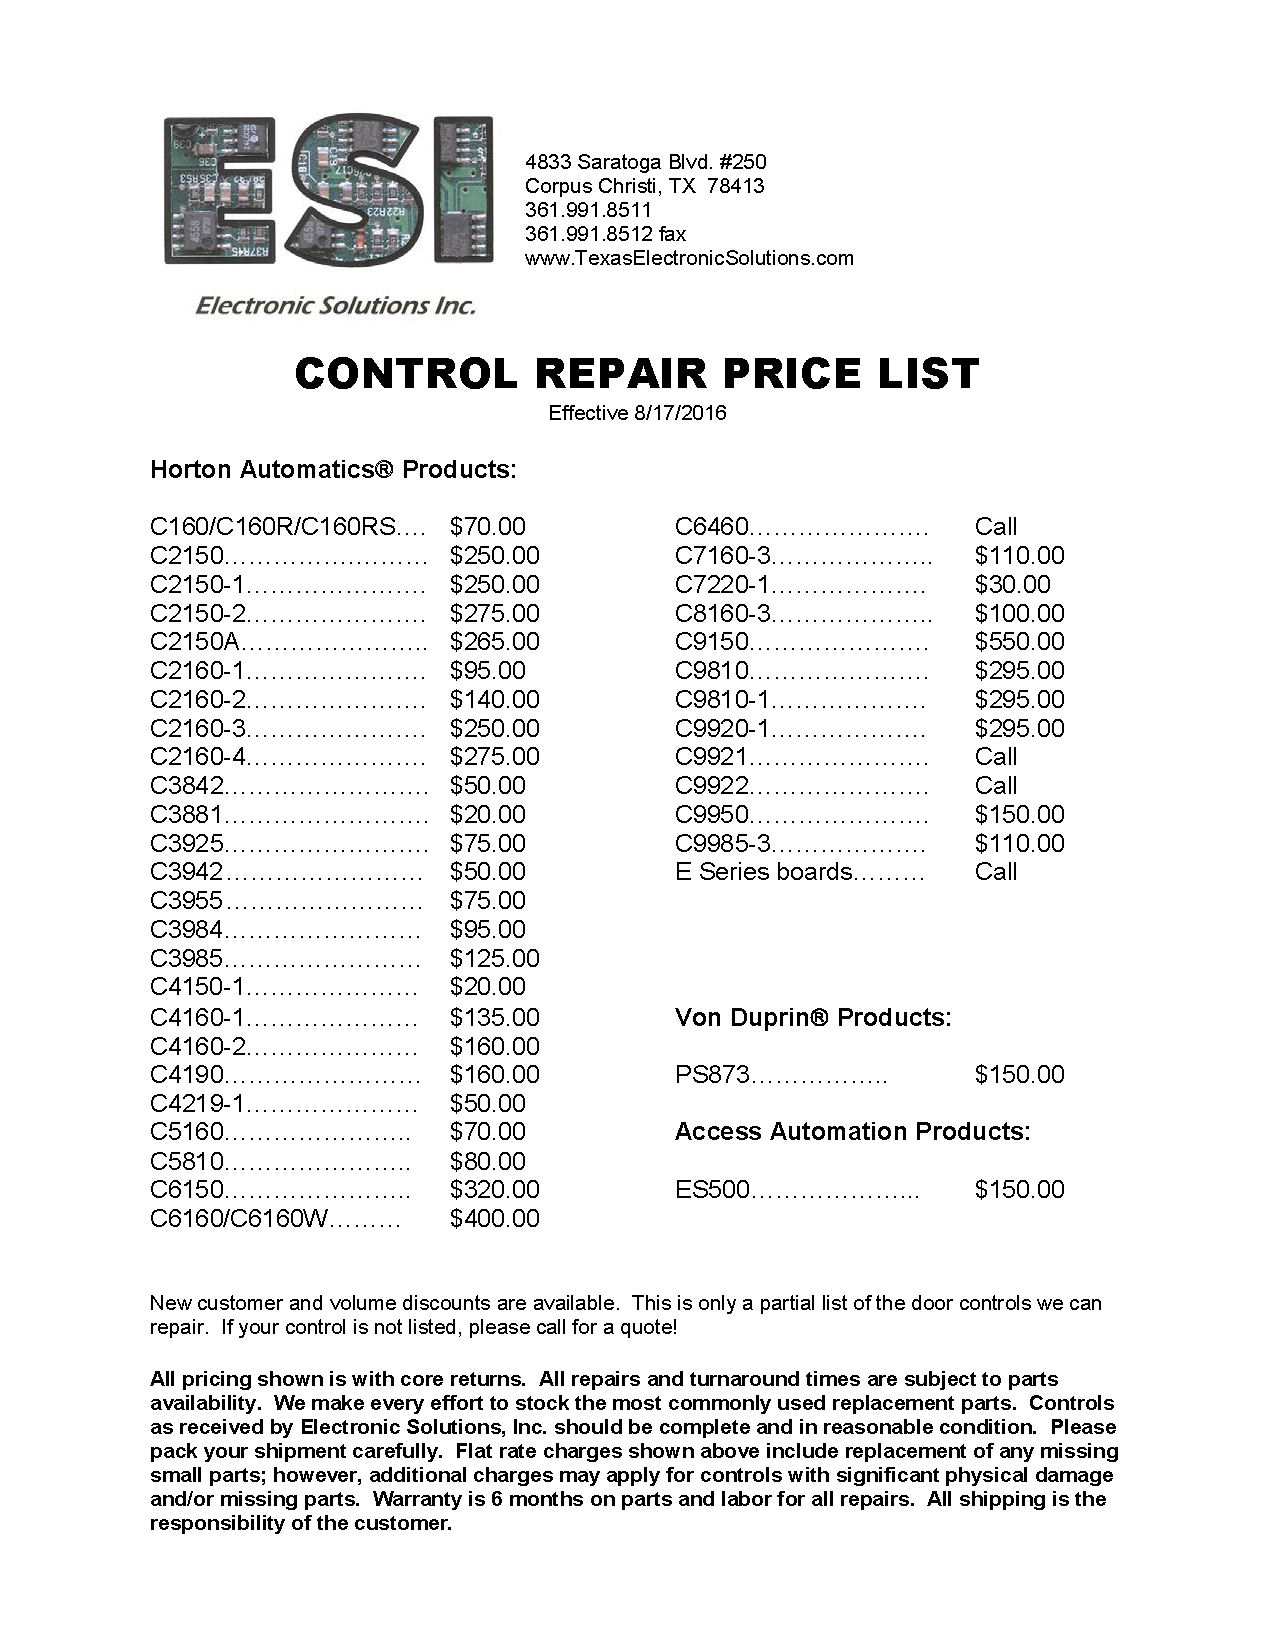 es-repair-pricing-8-17-16-1